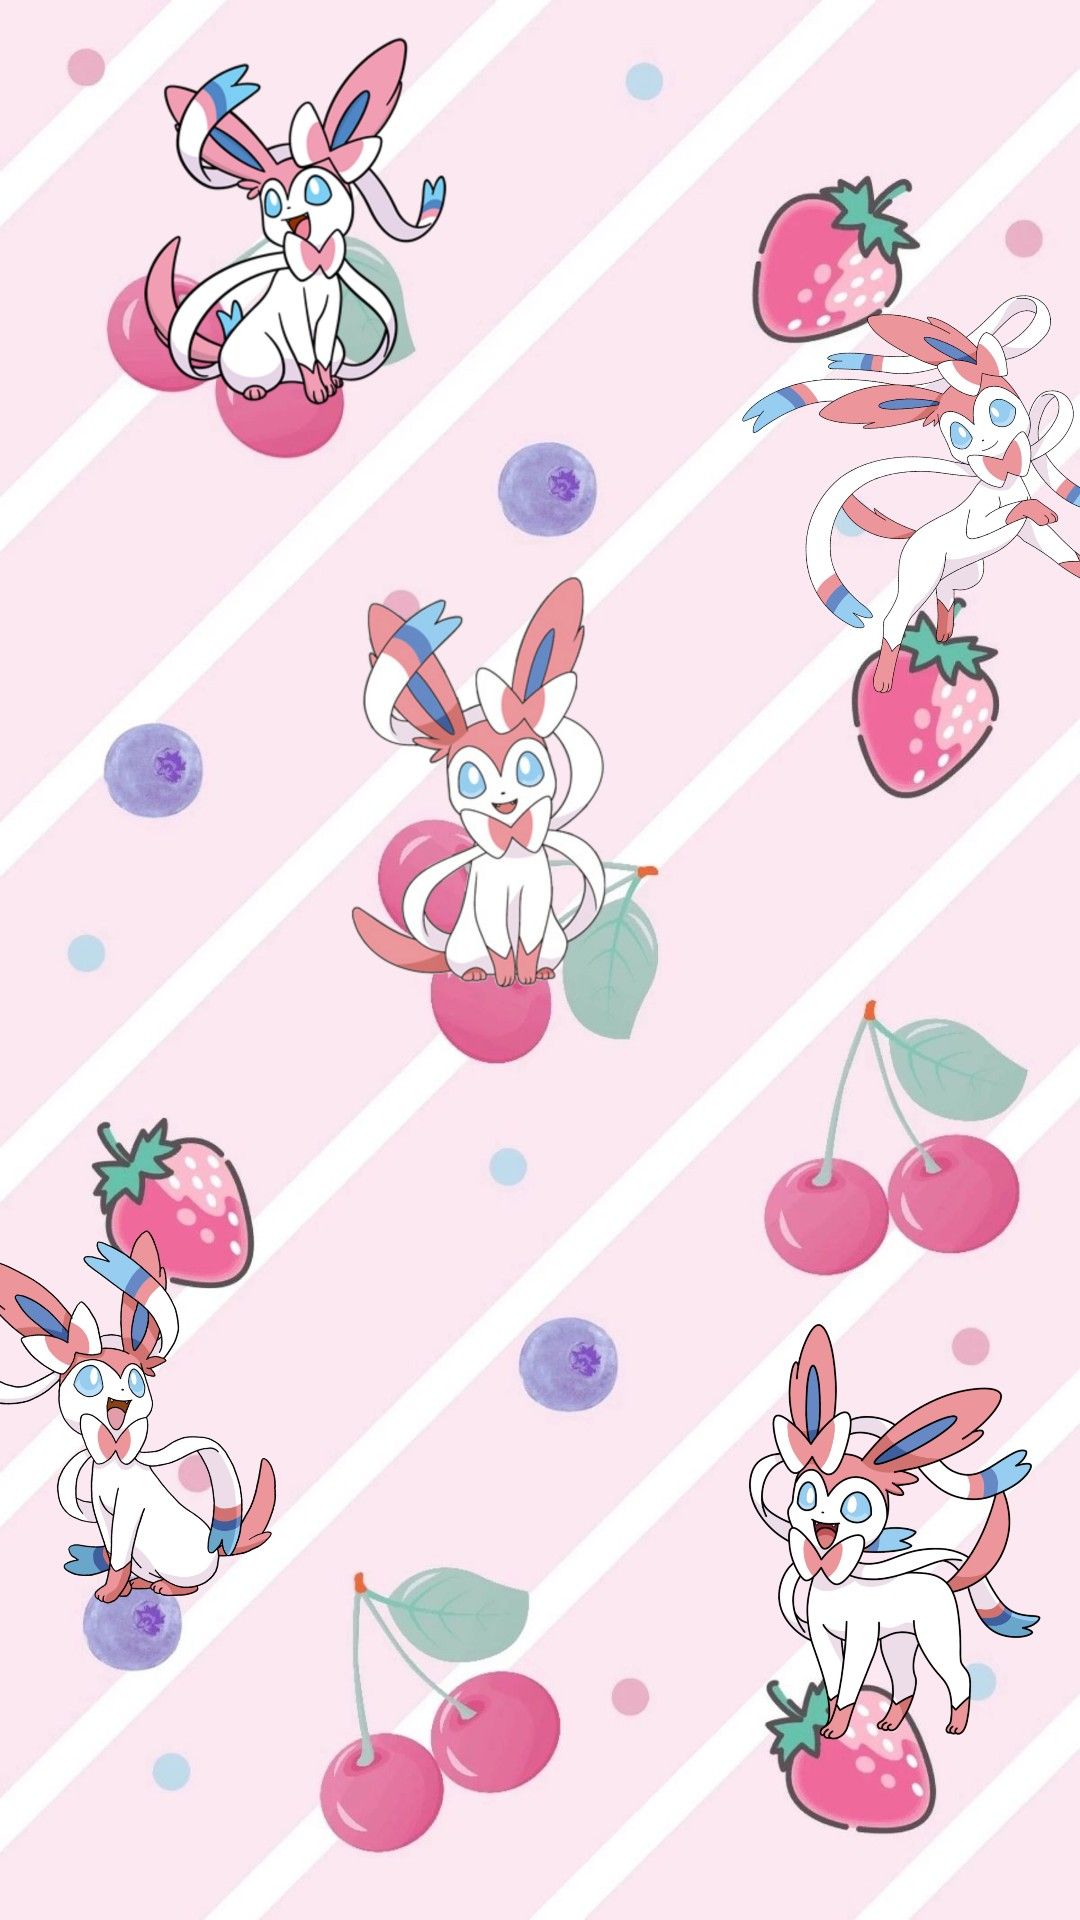 sylveon wallpaper 20. Anime wallpaper iphone, Eevee wallpaper, Pokemon background